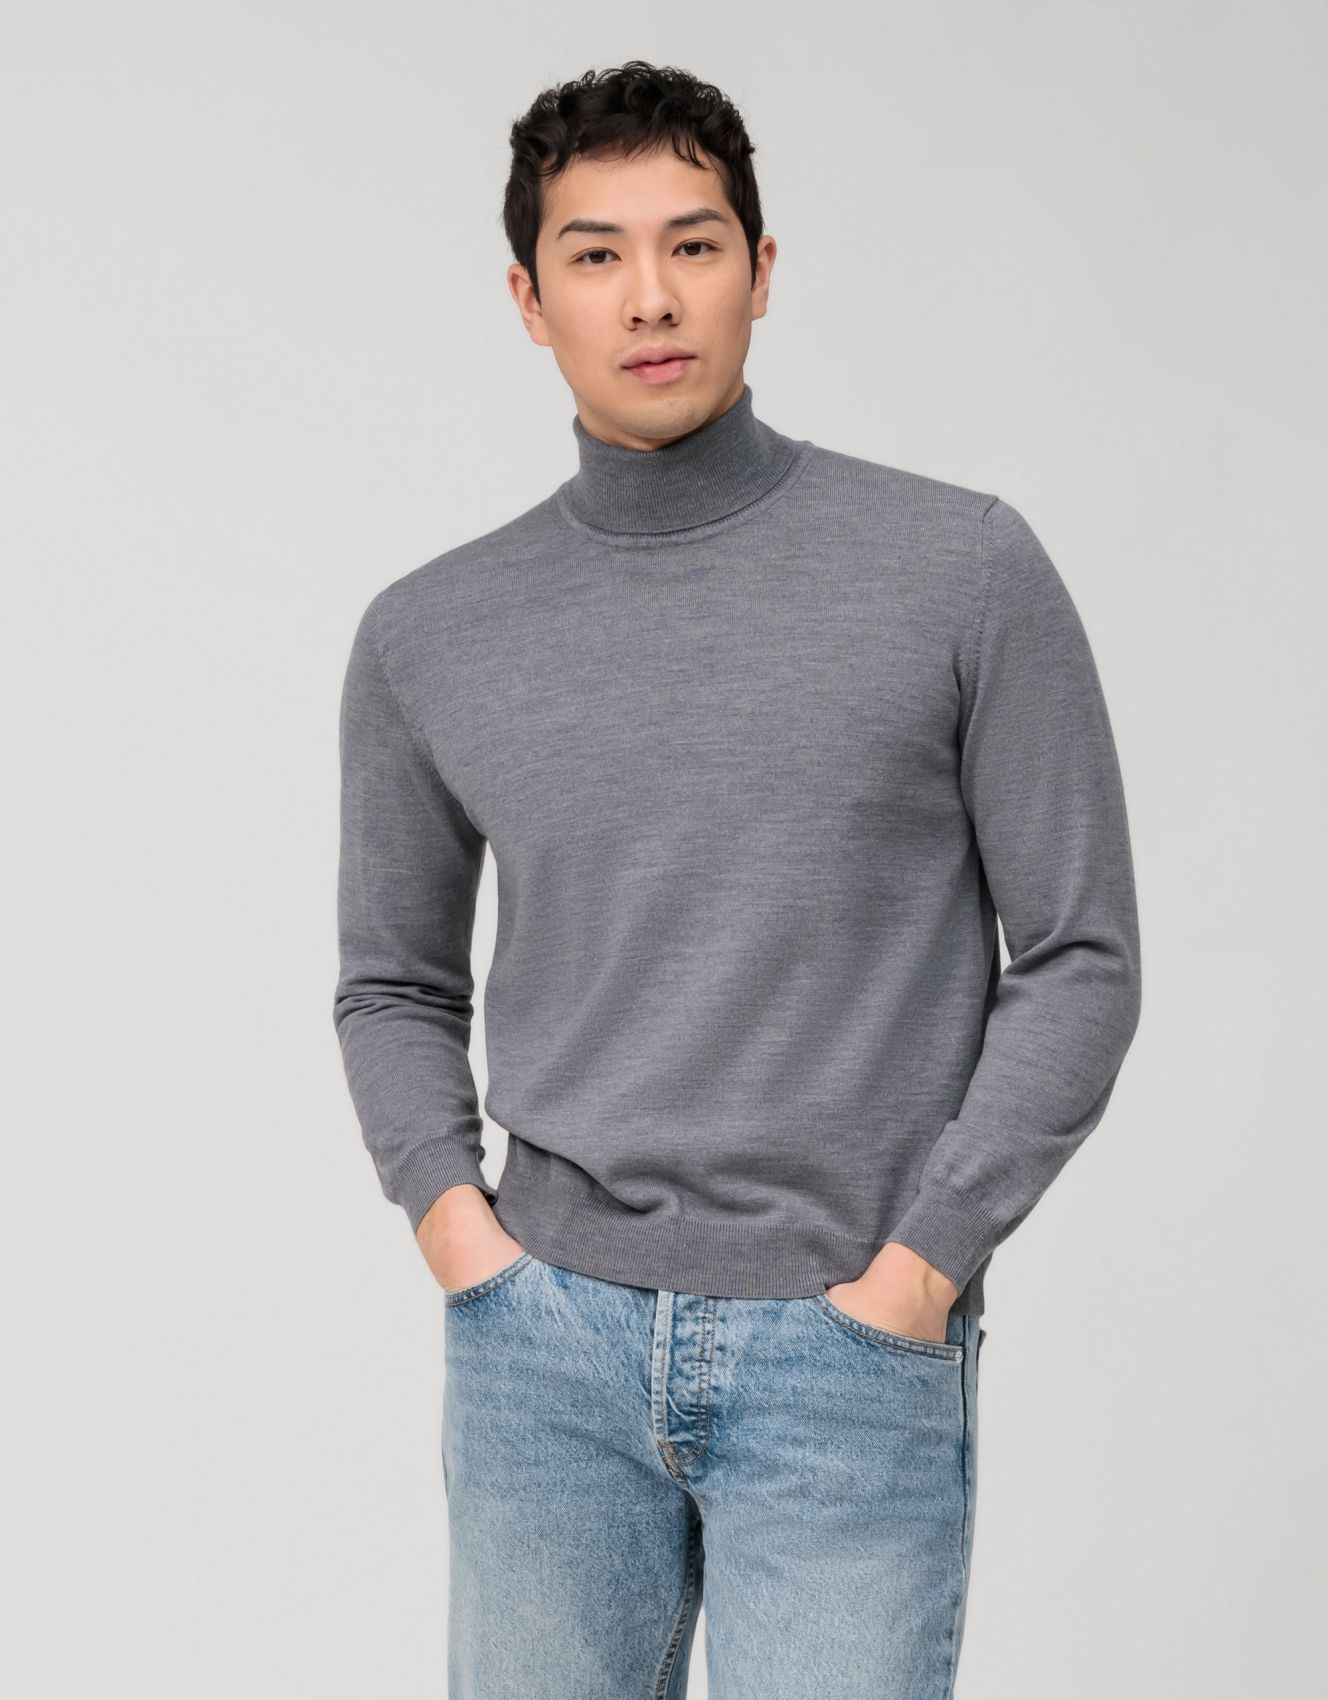 https://www.collectionabbigliamento.it/open2b/var/products/28/02/0-bddaf7e0-1700-Olymp-medium-grey-turtleneck-sweater-in-extra-fine-merino-wool.jpg